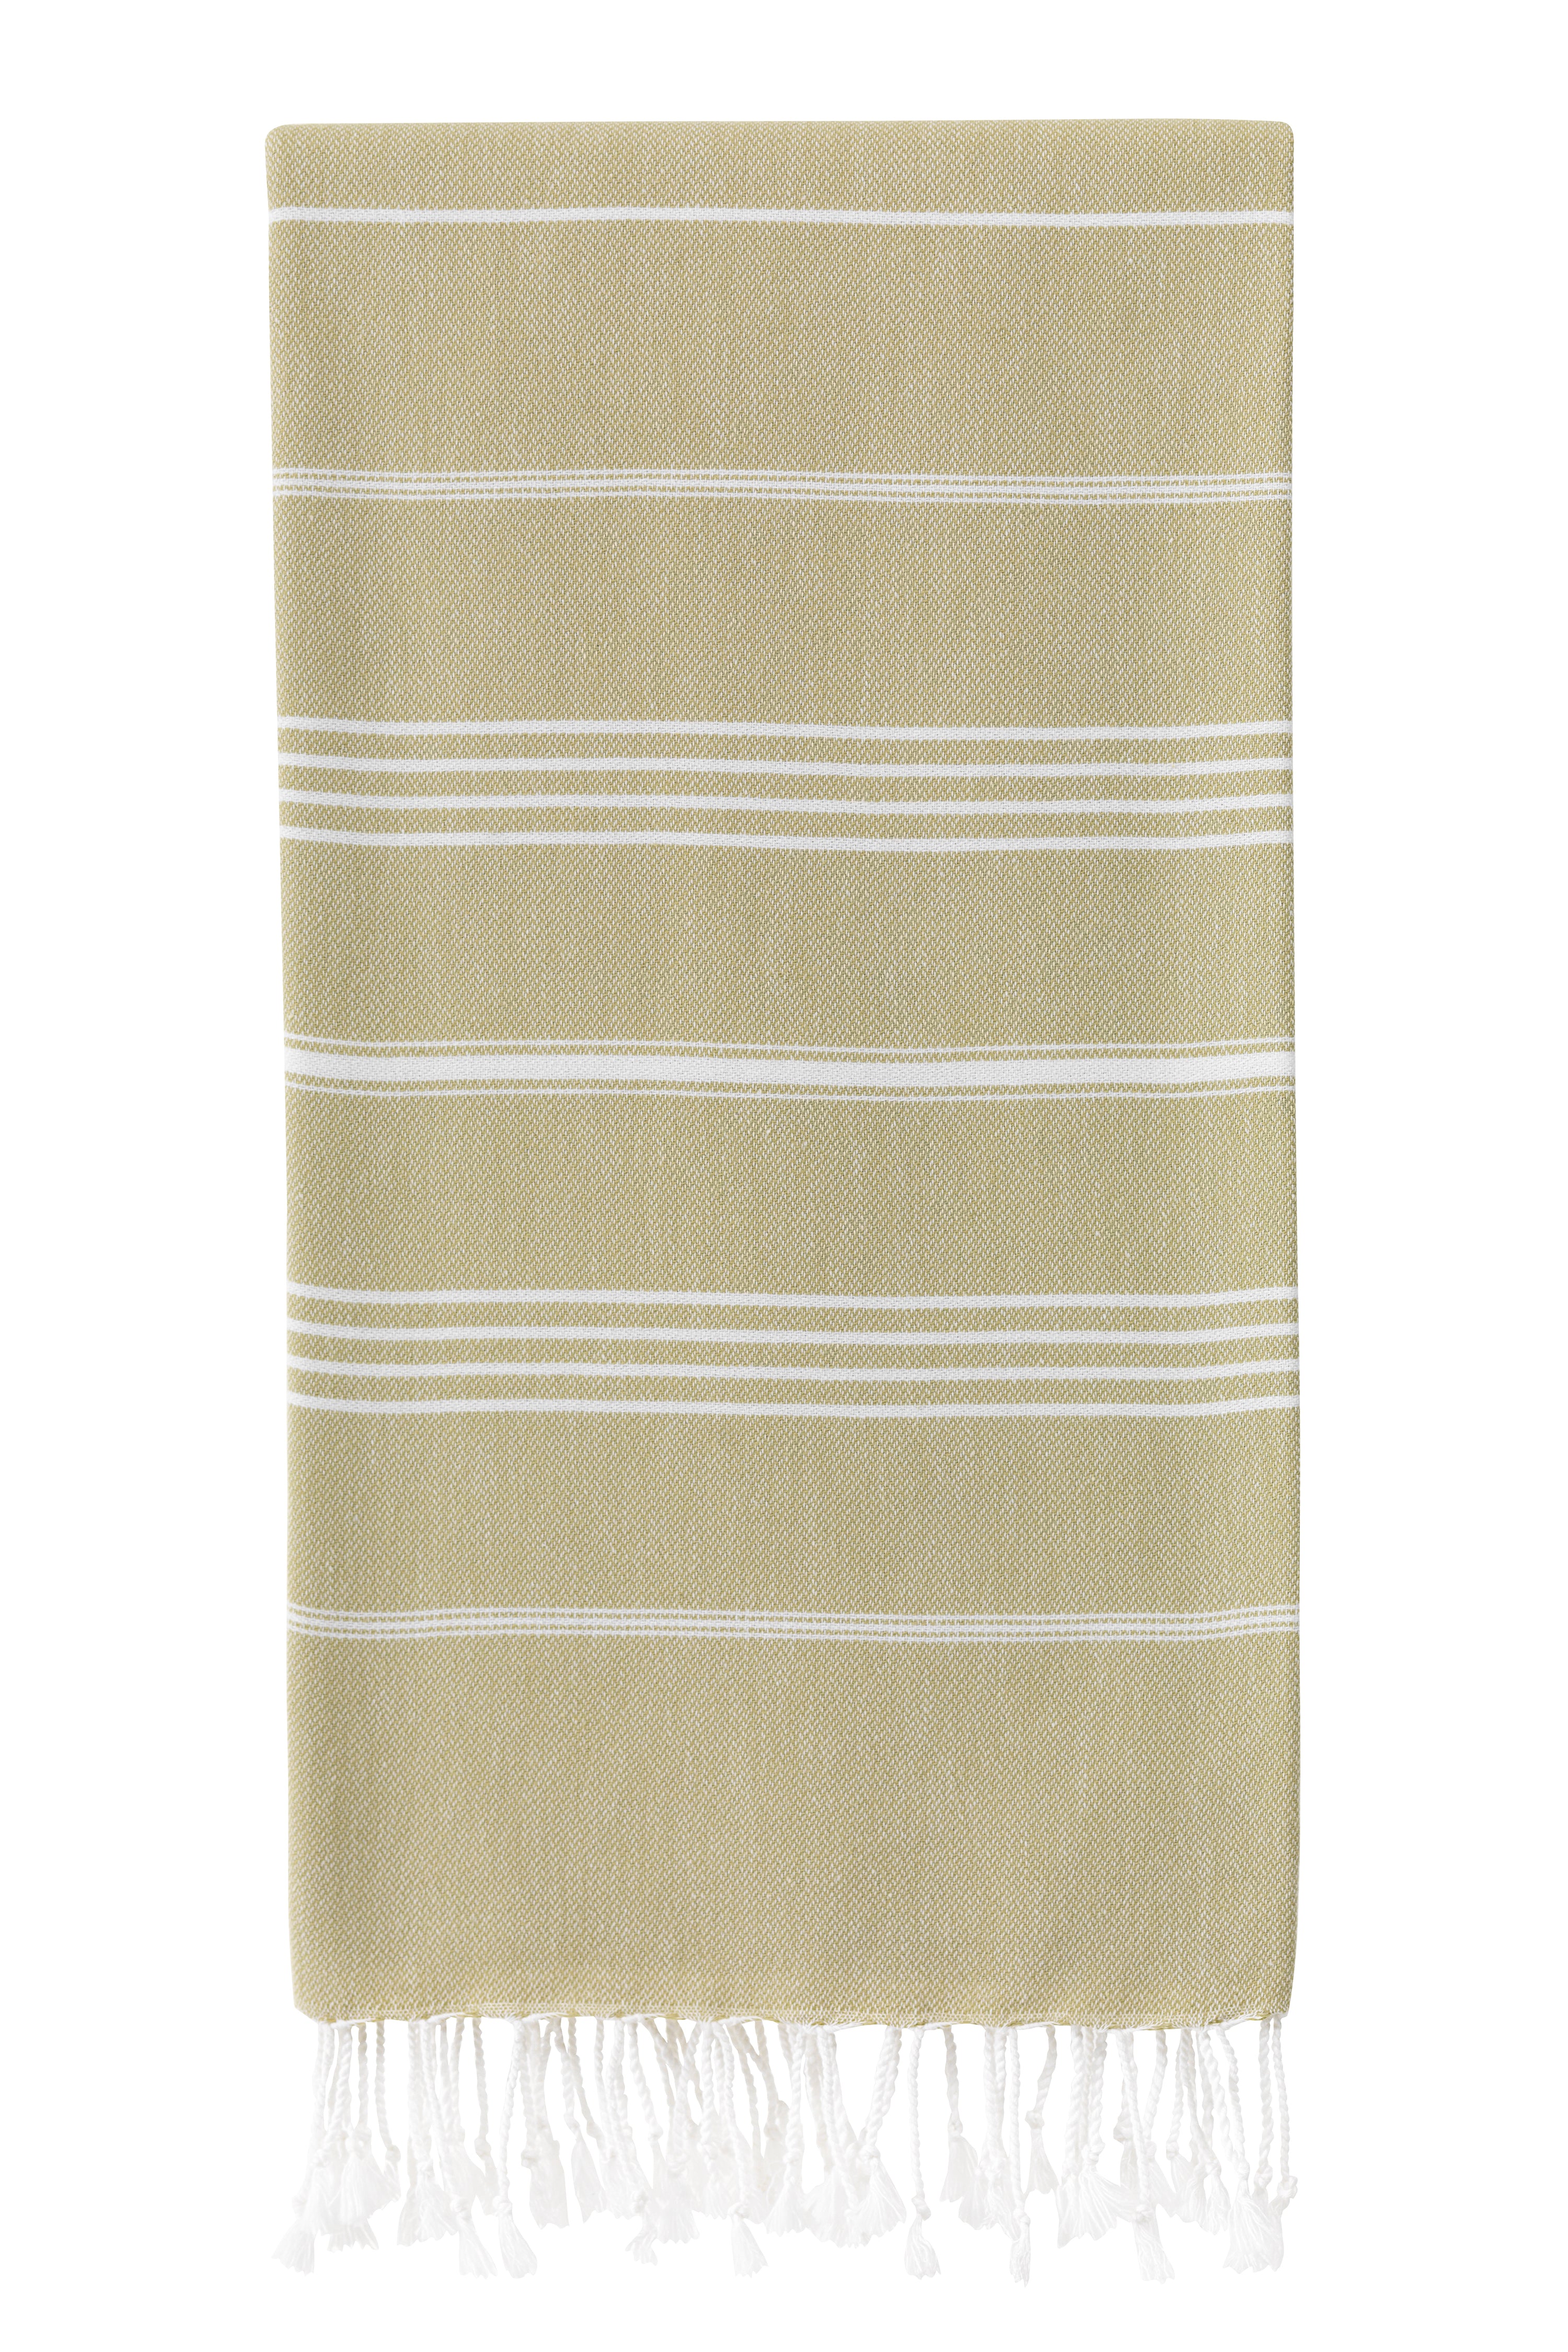 Cotton Turkish Towel, Soft Durable Comfortable Turkish Striped